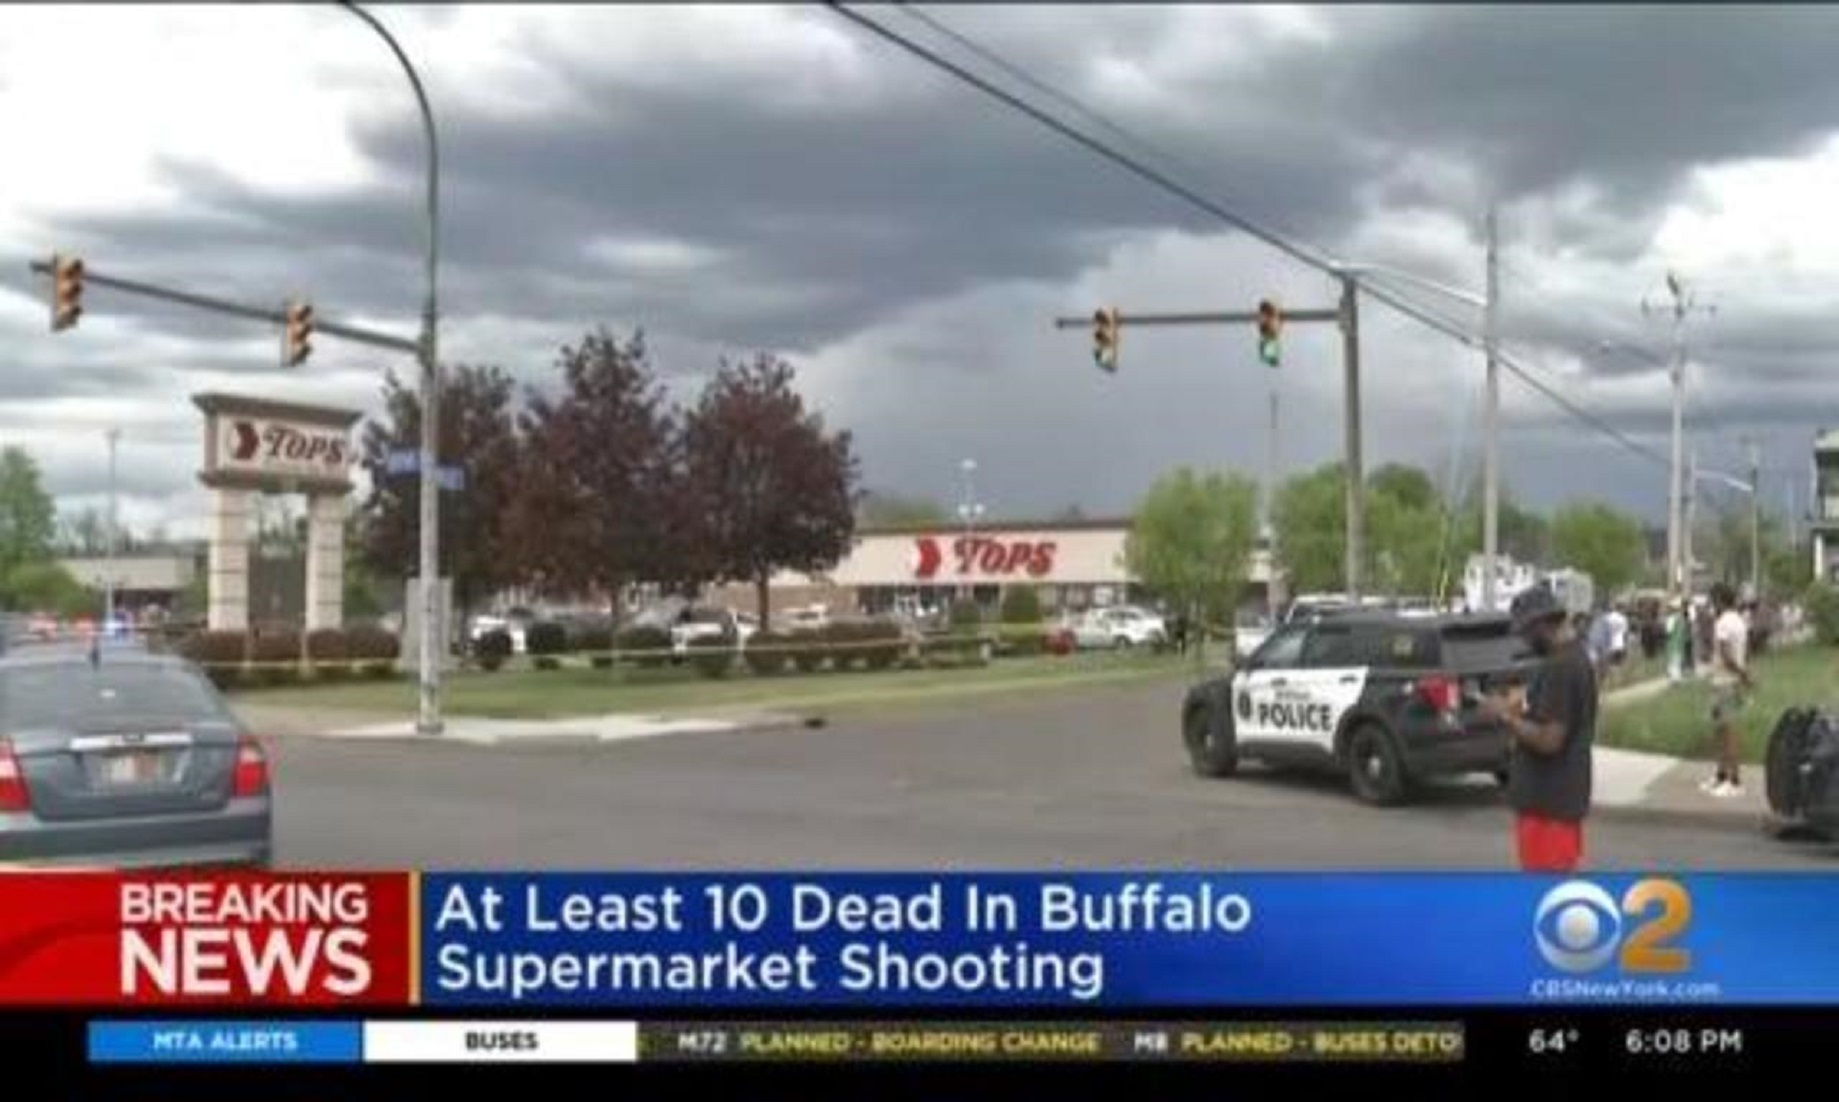 Biden Briefed On “Horrific Shooting” In Buffalo: White House